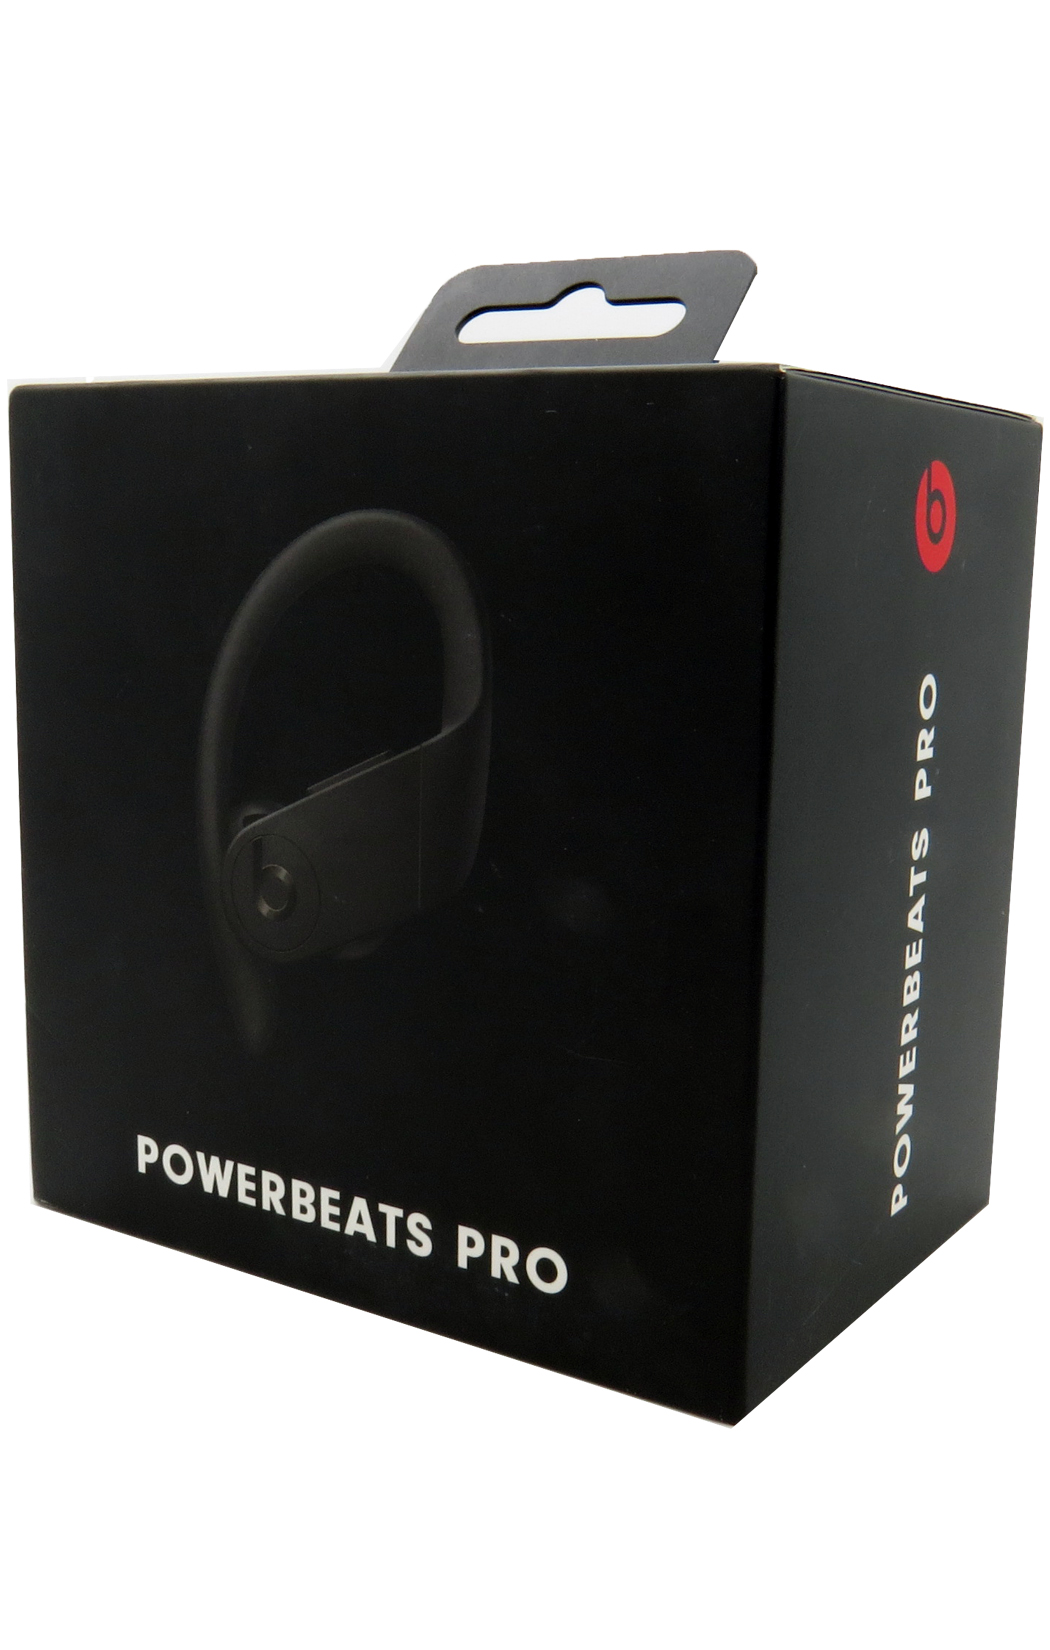 powerbeats pro totally wireless earphones white